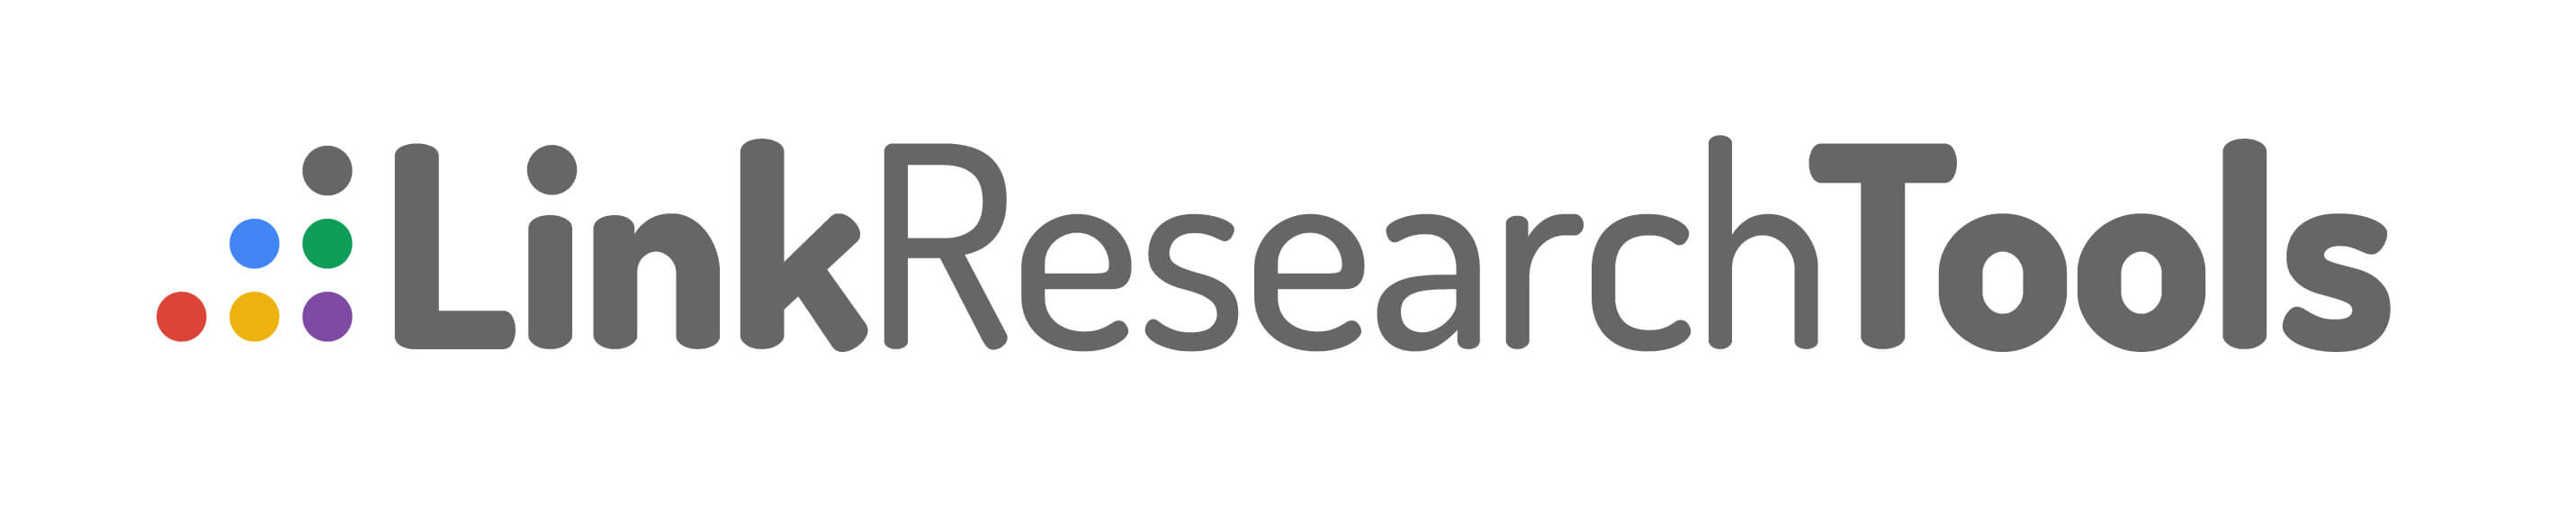 LinkResearchTools Academy - SEO & Online Marketing Training logo